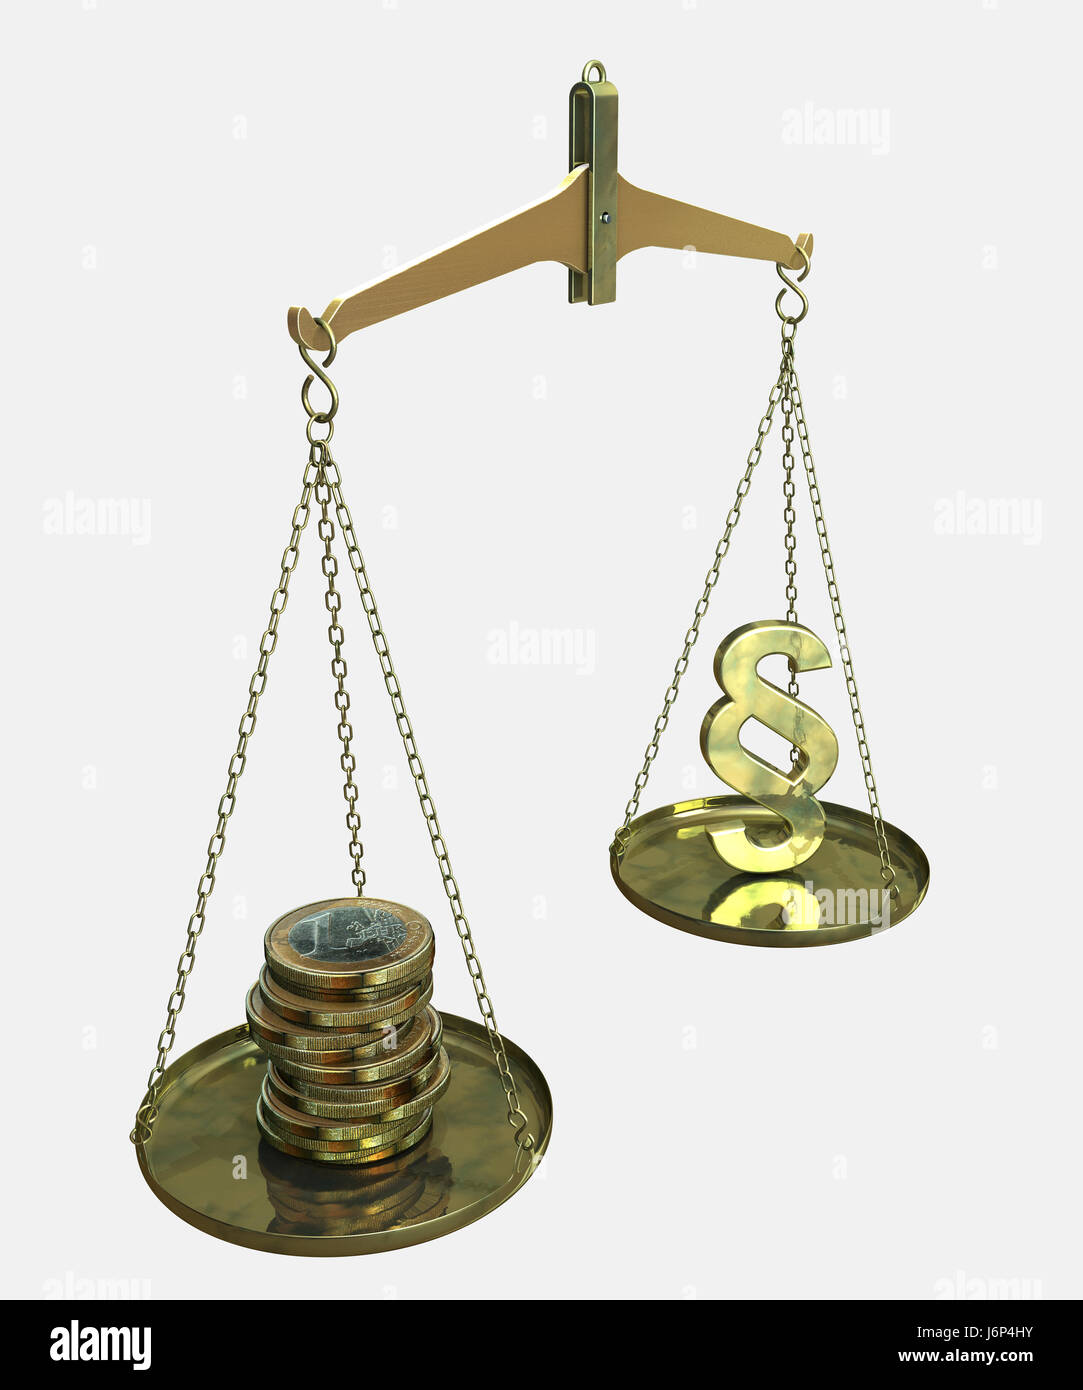 bribery scales justice jurisdiction law money finances bribery corruption Stock Photo